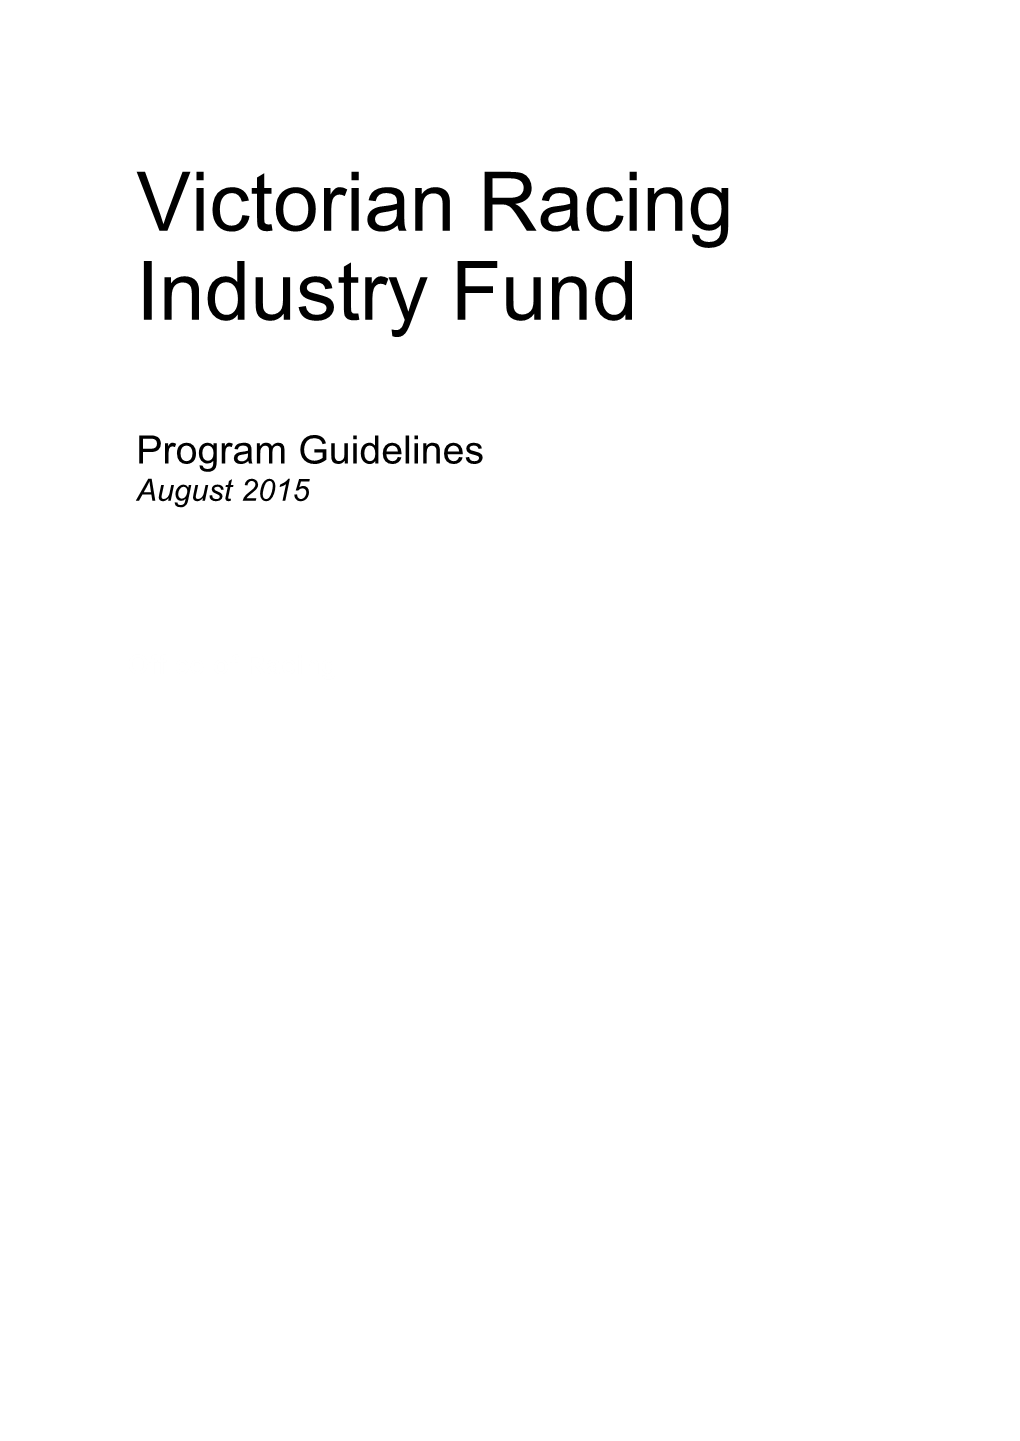 Victorian Racing Industry Fund - Program Guidelines